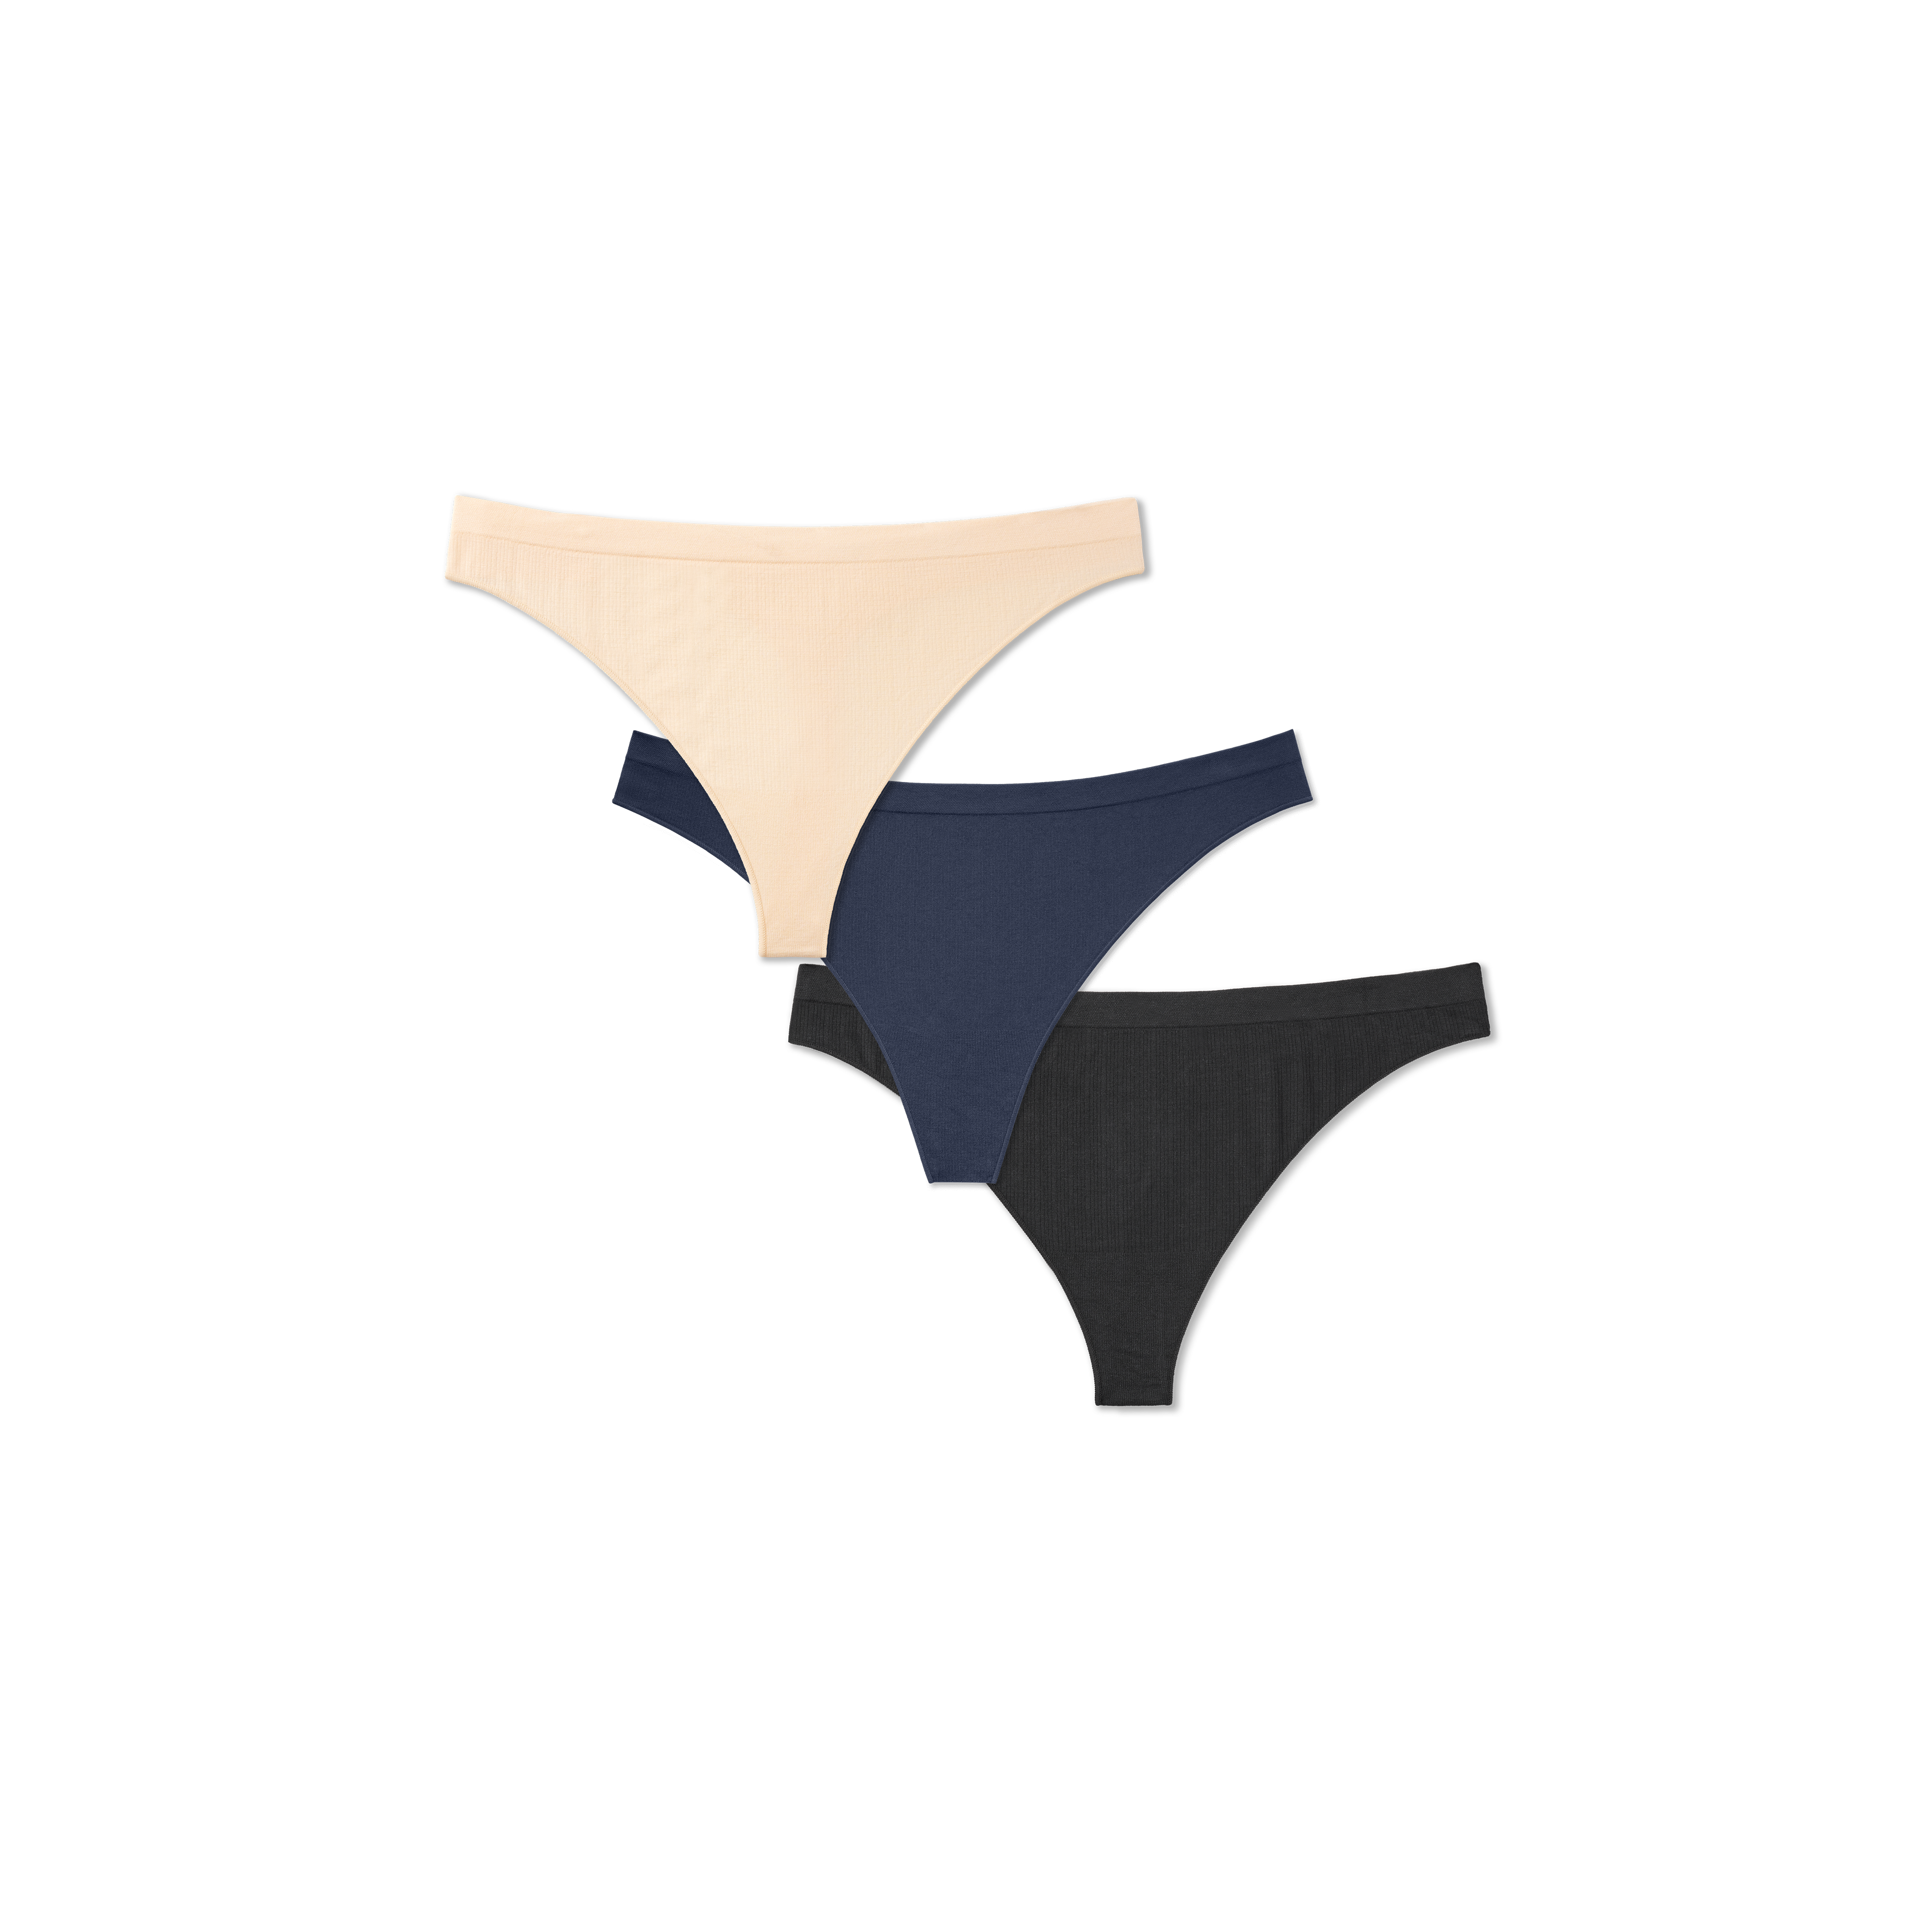 Buy GRANKEE Women's Breathable Seamless Thong Panties No Show Underwear 3-6  Pack online